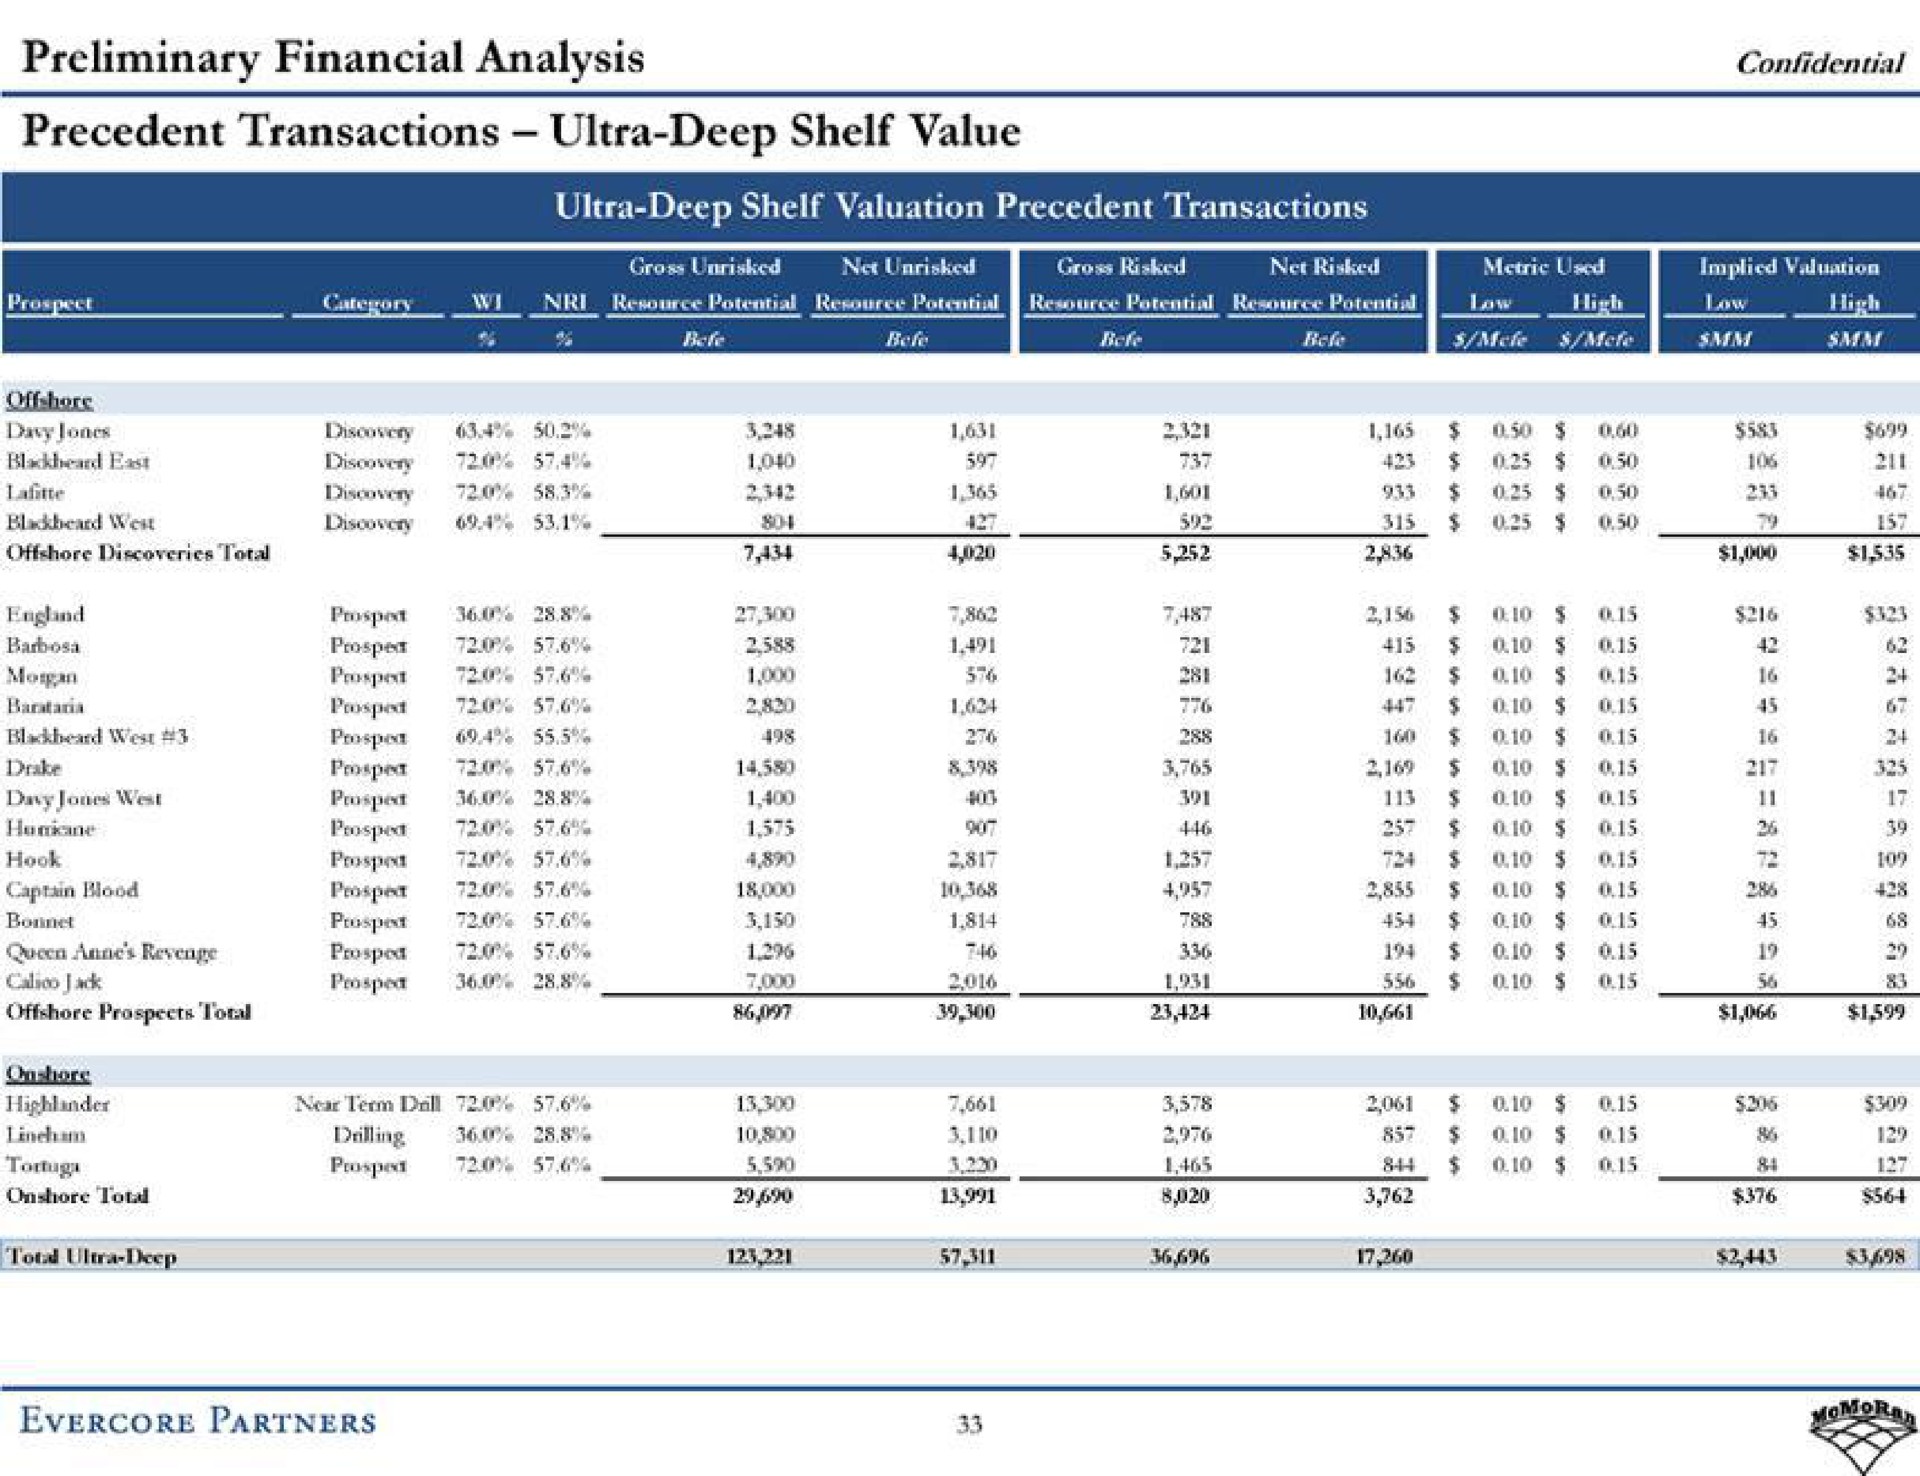 preliminary financial analysis precedent transactions ultra deep shelf value confidential partners | Evercore